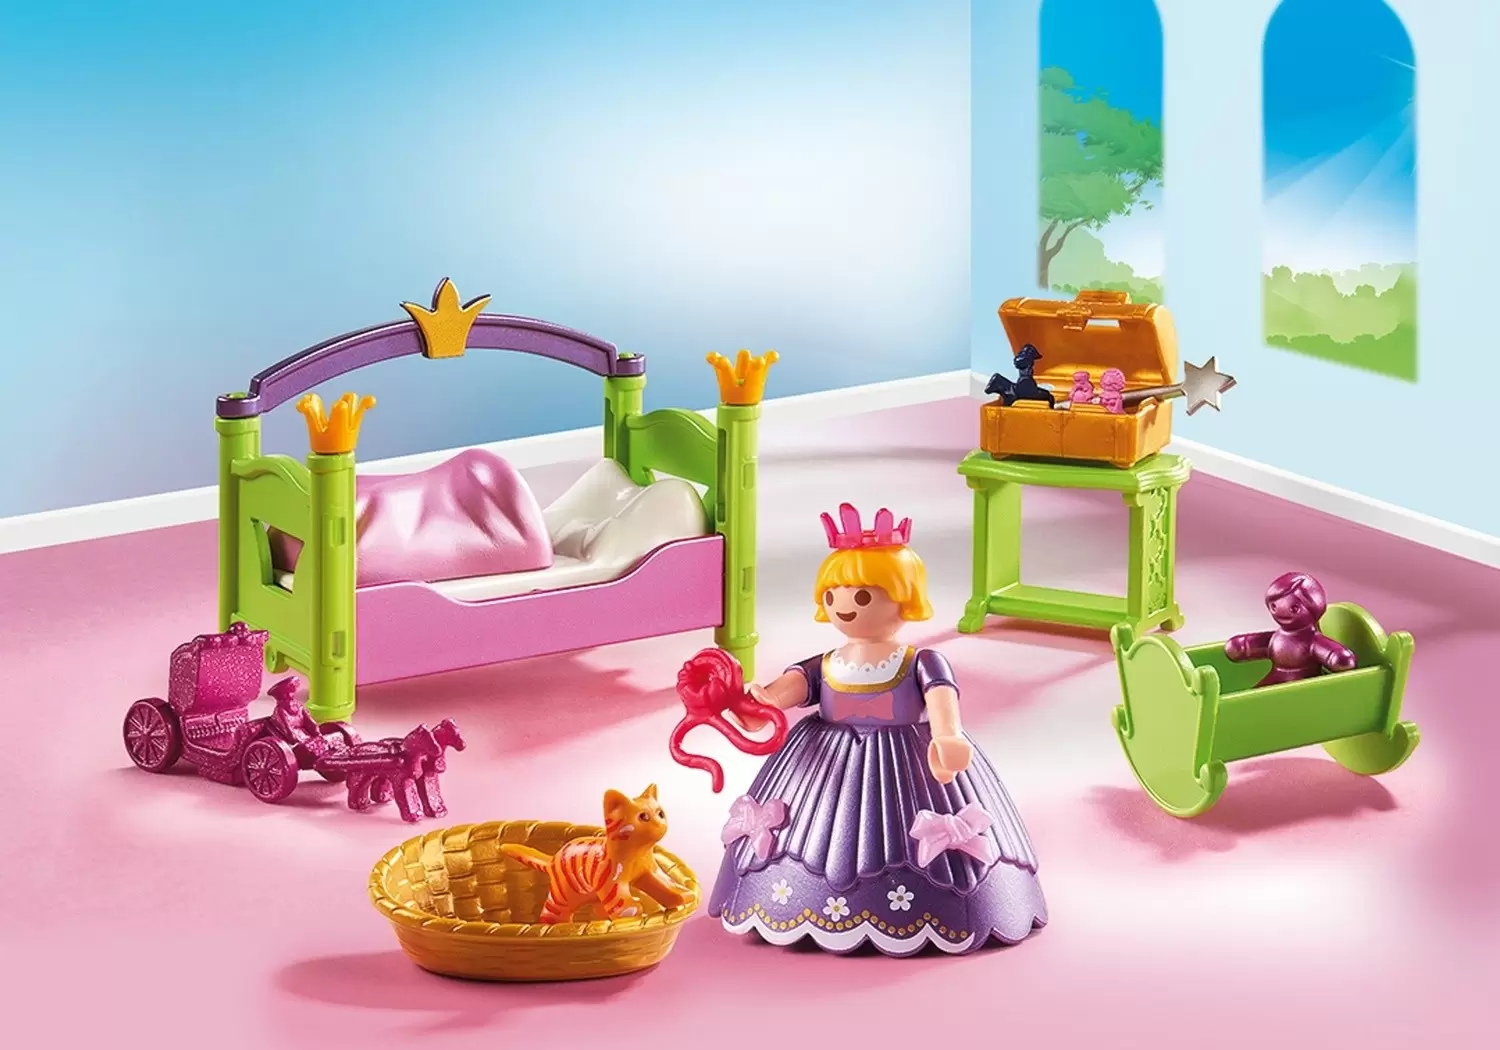 Children's room - Playmobil 6852